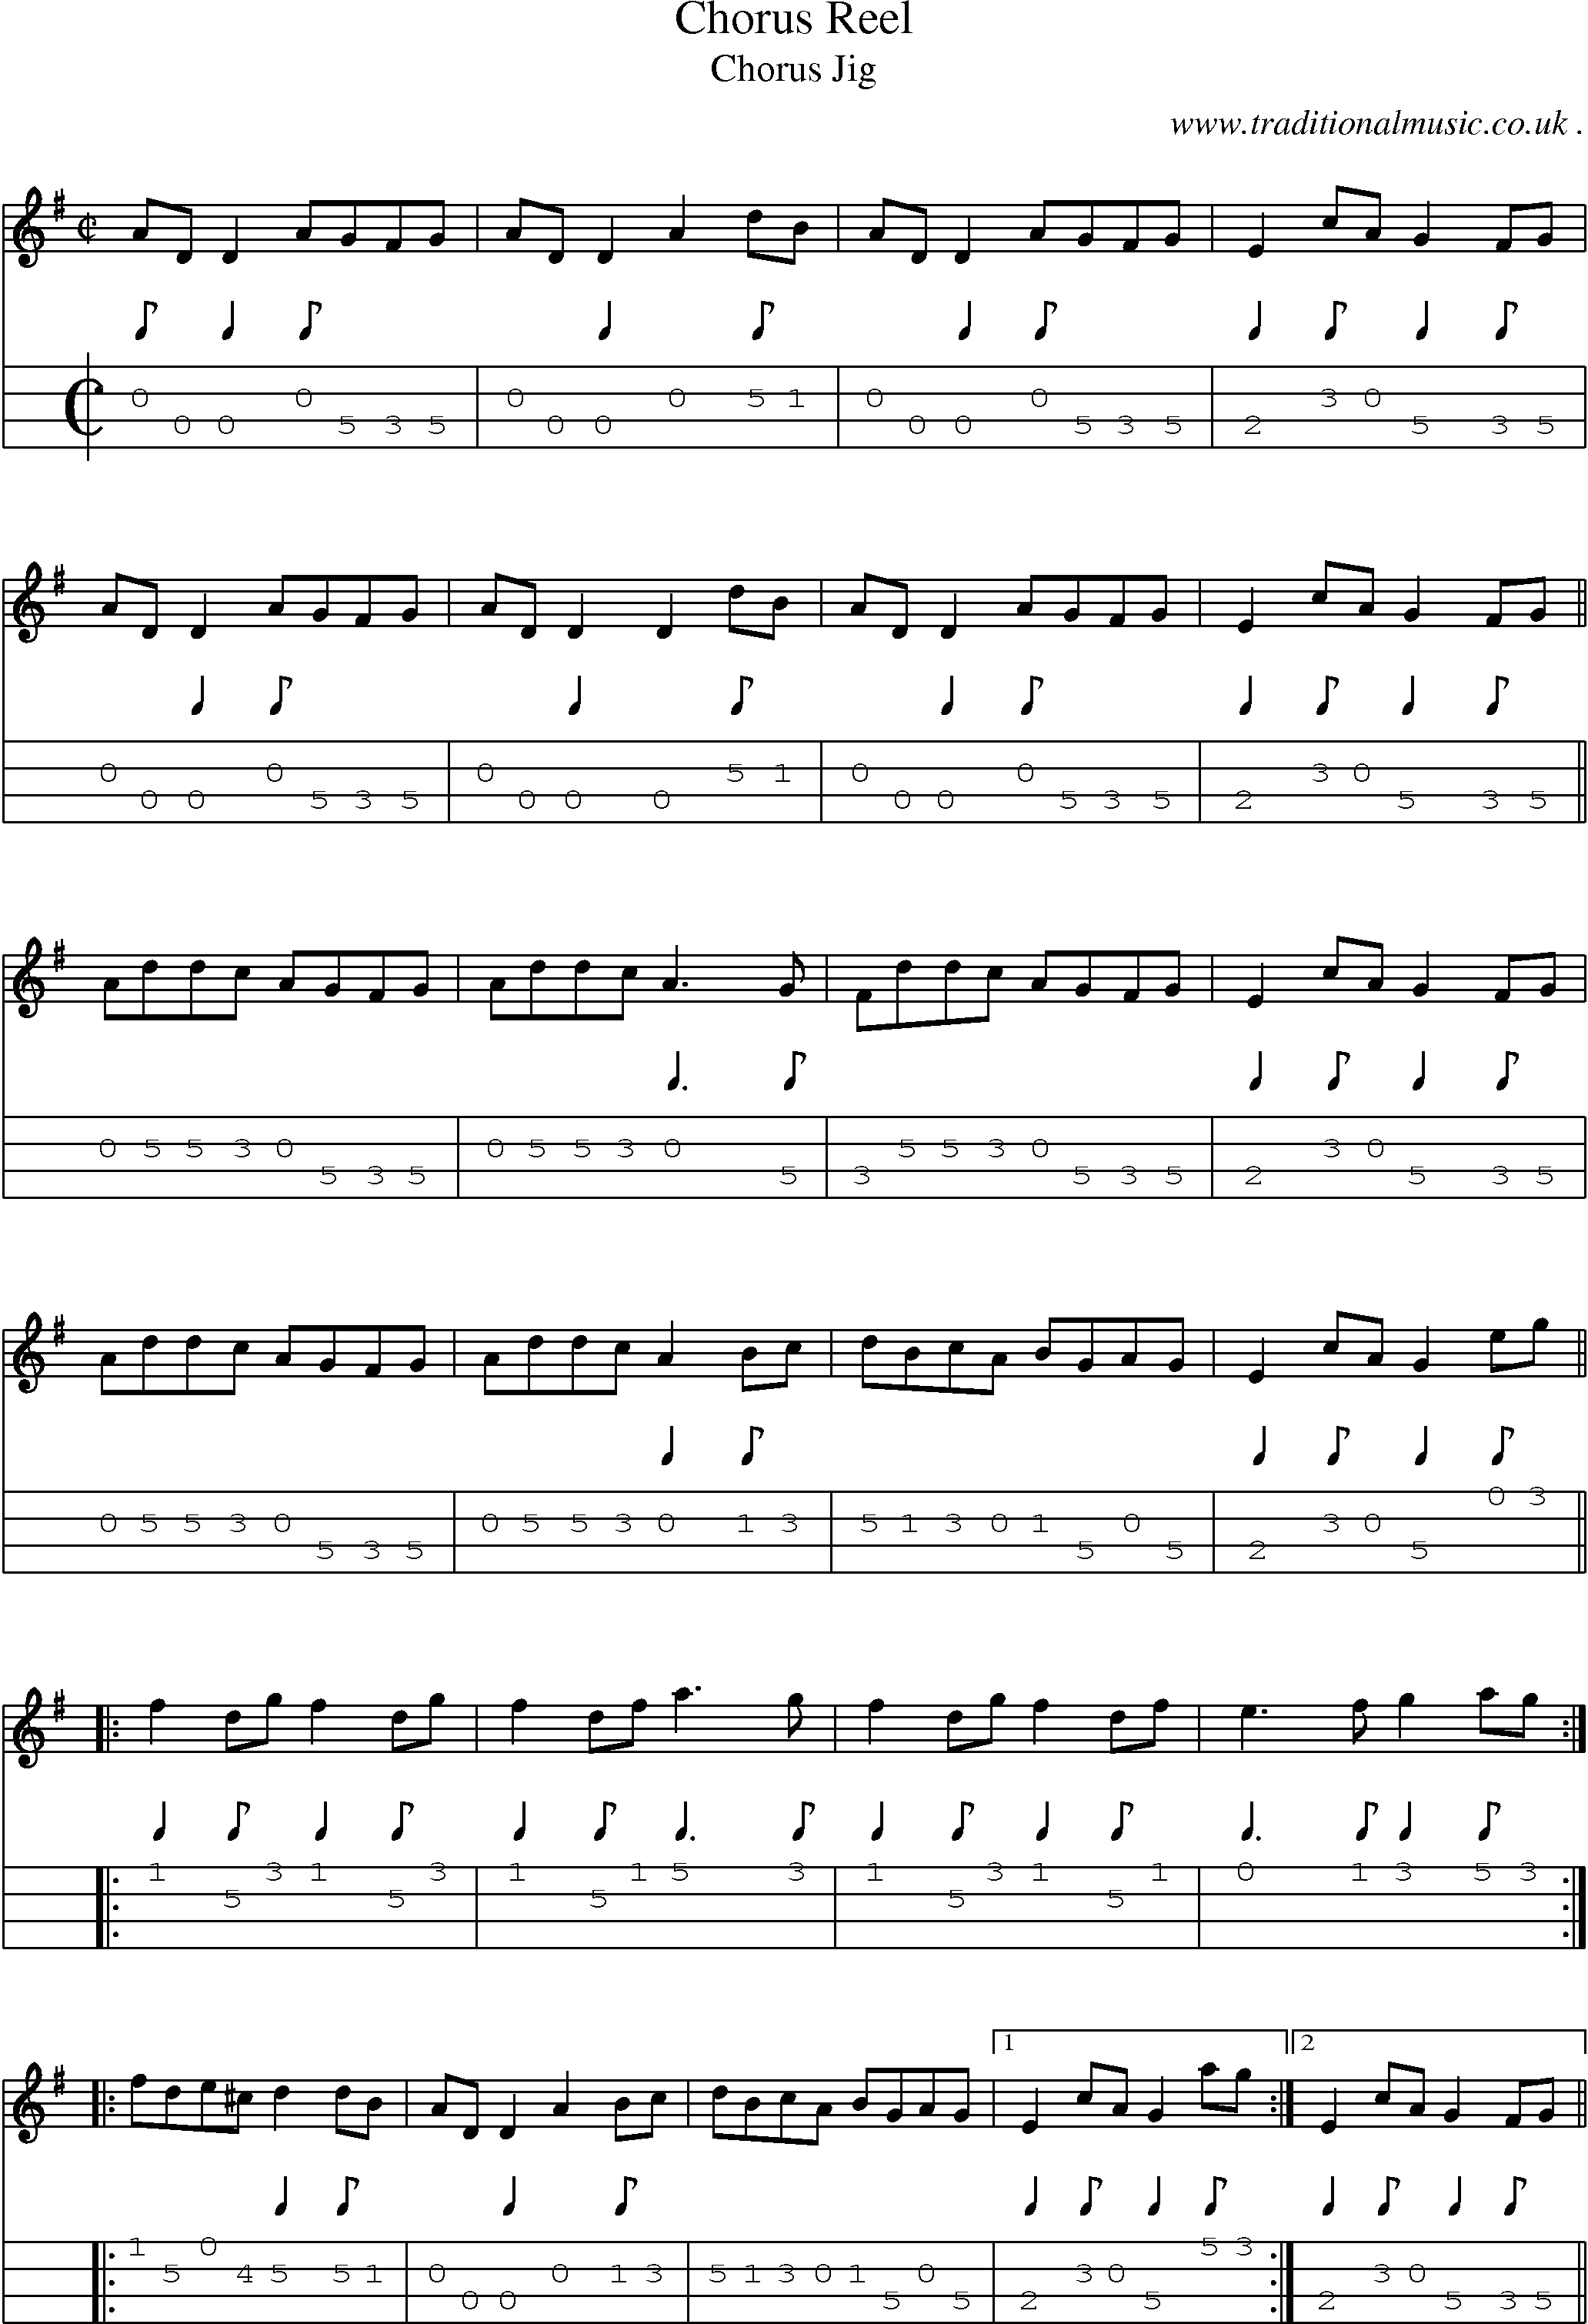 Sheet-Music and Mandolin Tabs for Chorus Reel